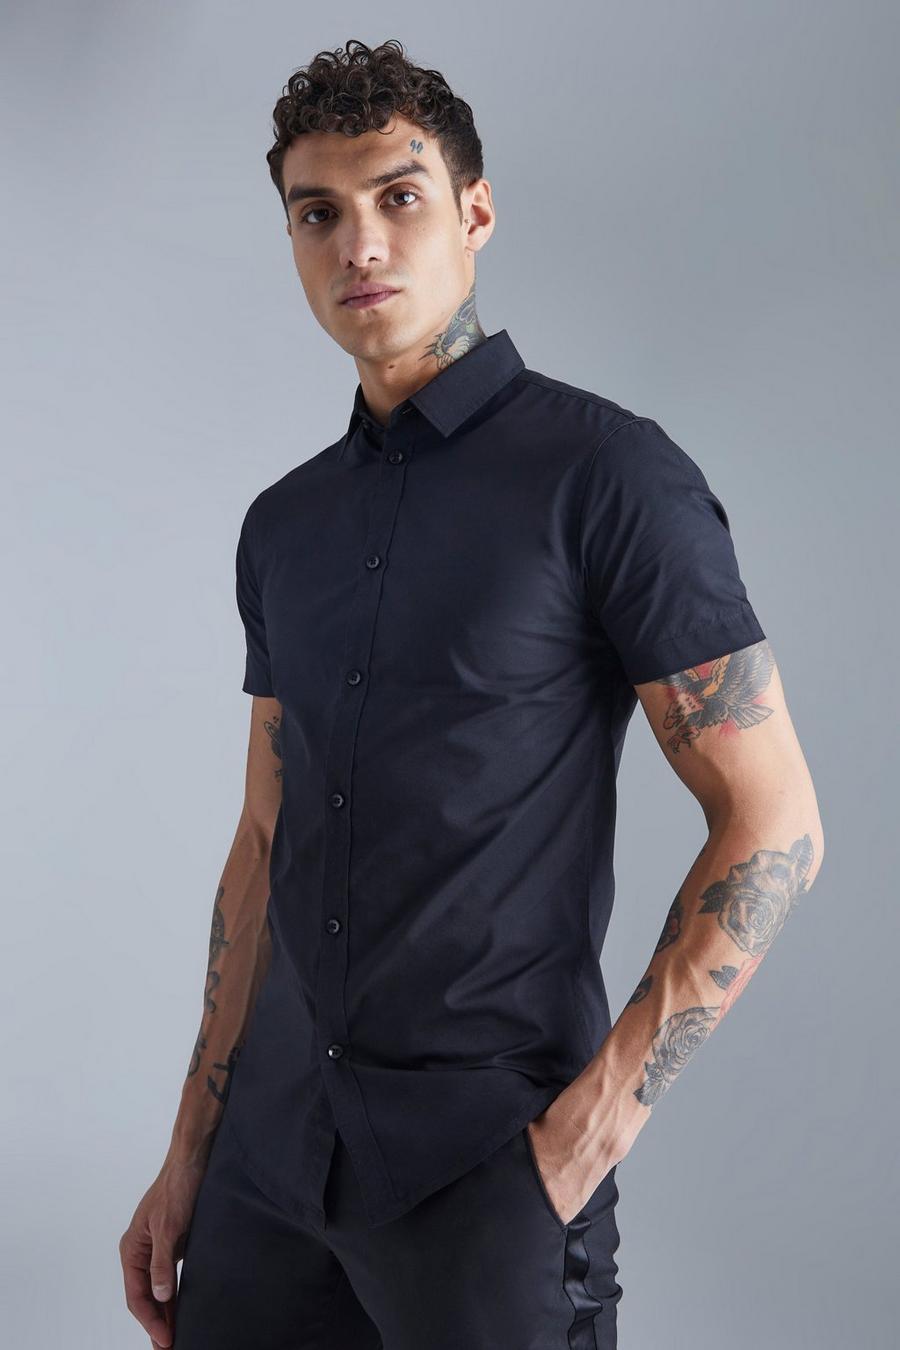 Black Short Sleeve Muscle Shirt